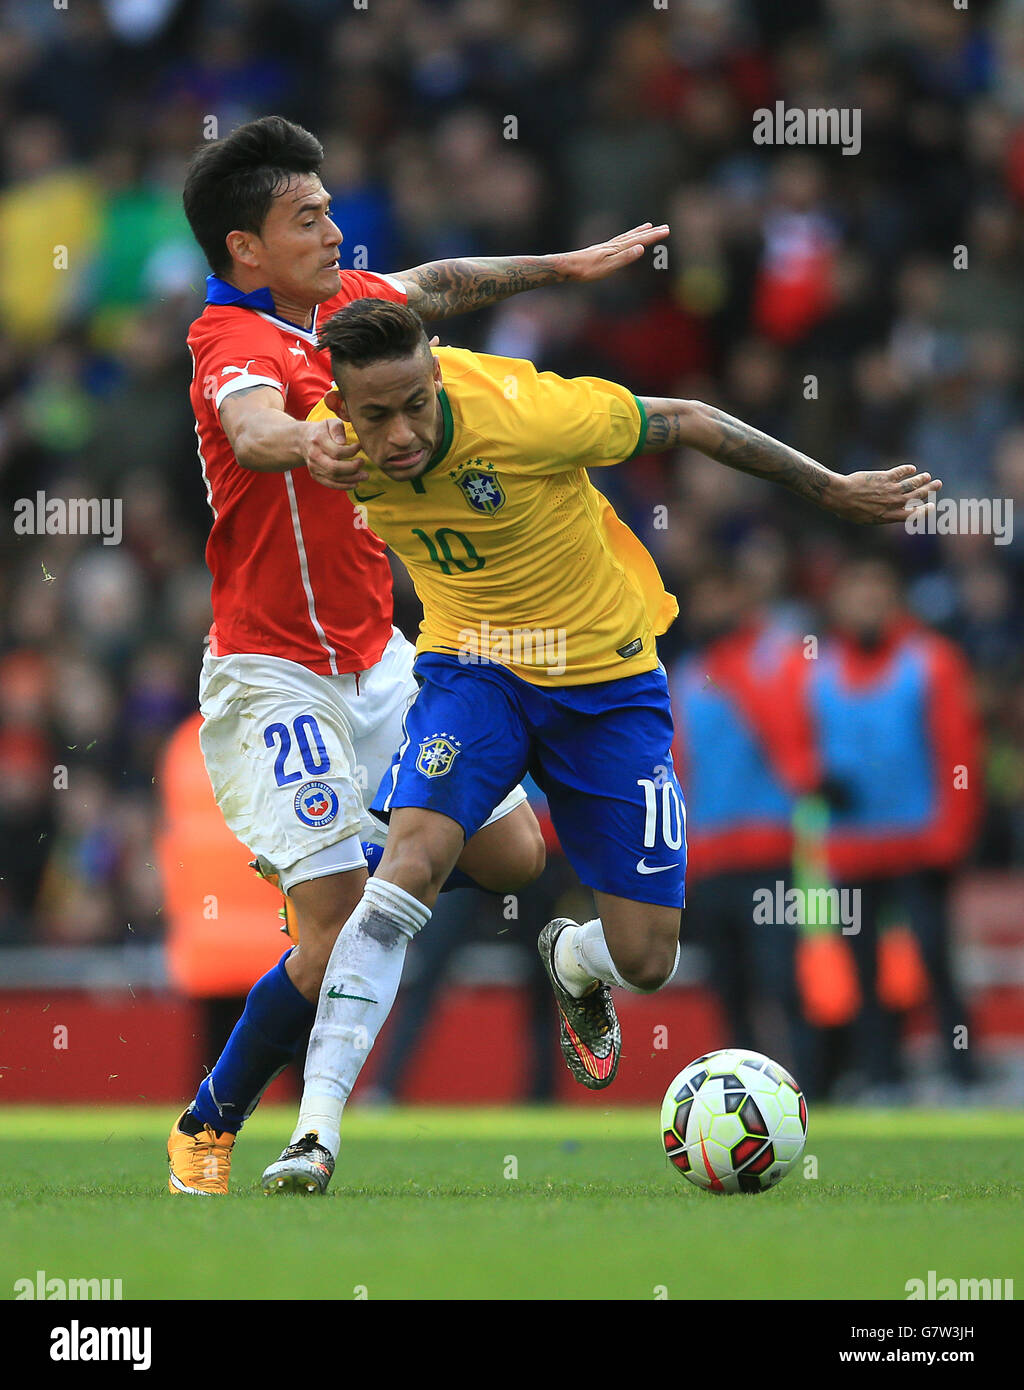 Soccer - International Friendly - Brazil v Chile - Emirates Stadium. Brazil's Neymar (right) and Chile's Charles Aranguiz battle for the ball. Stock Photo